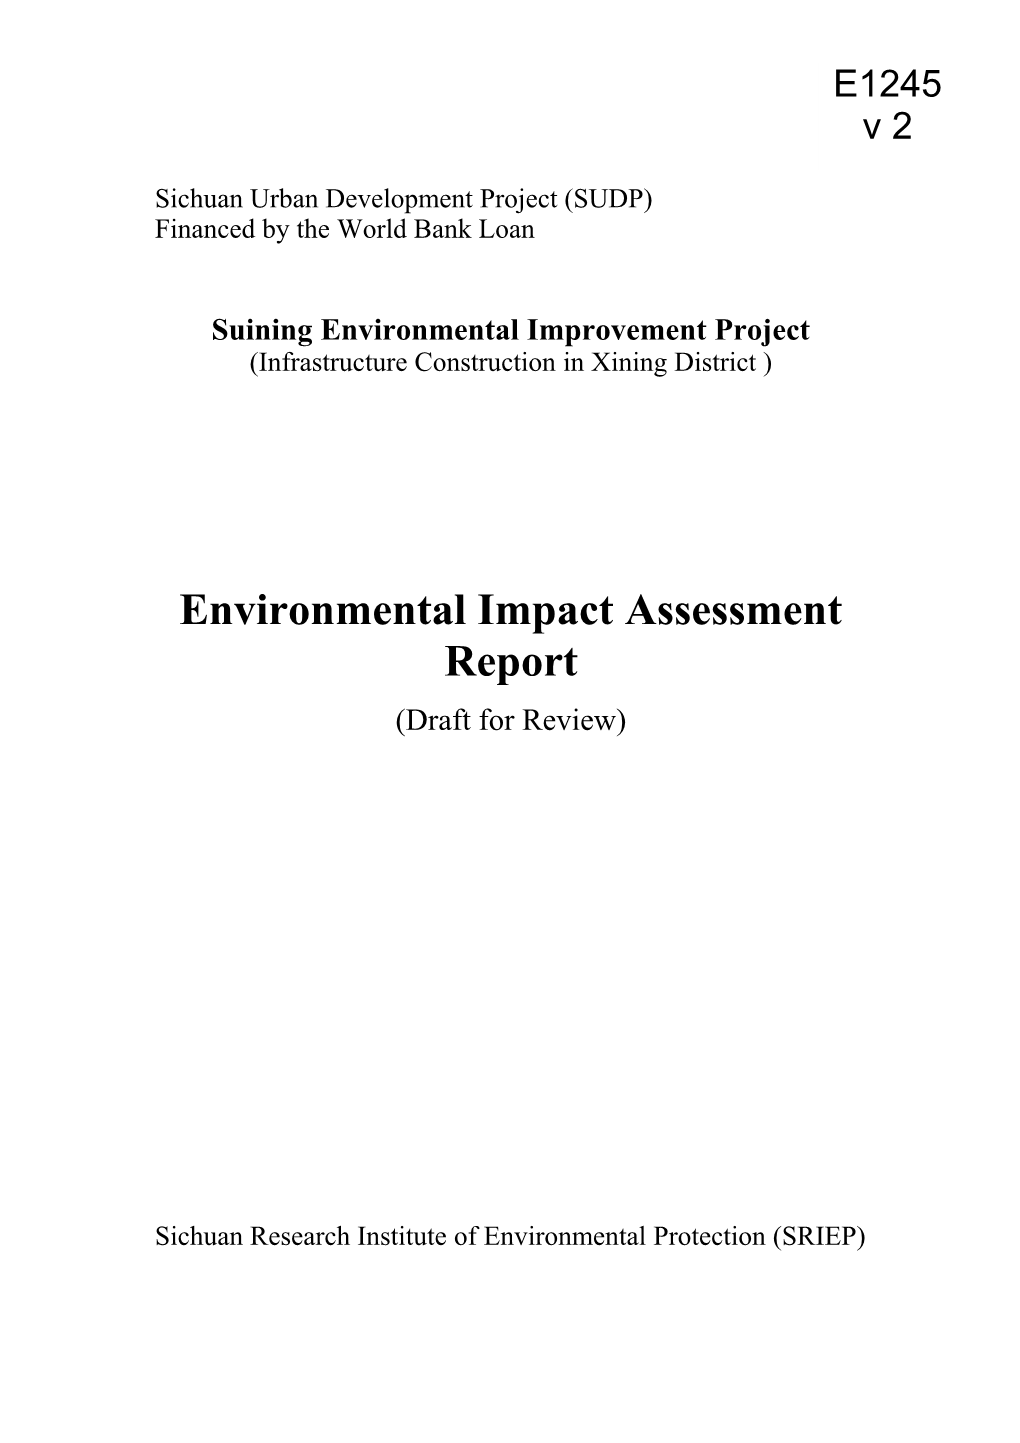 Suining Environmental Improvement Project